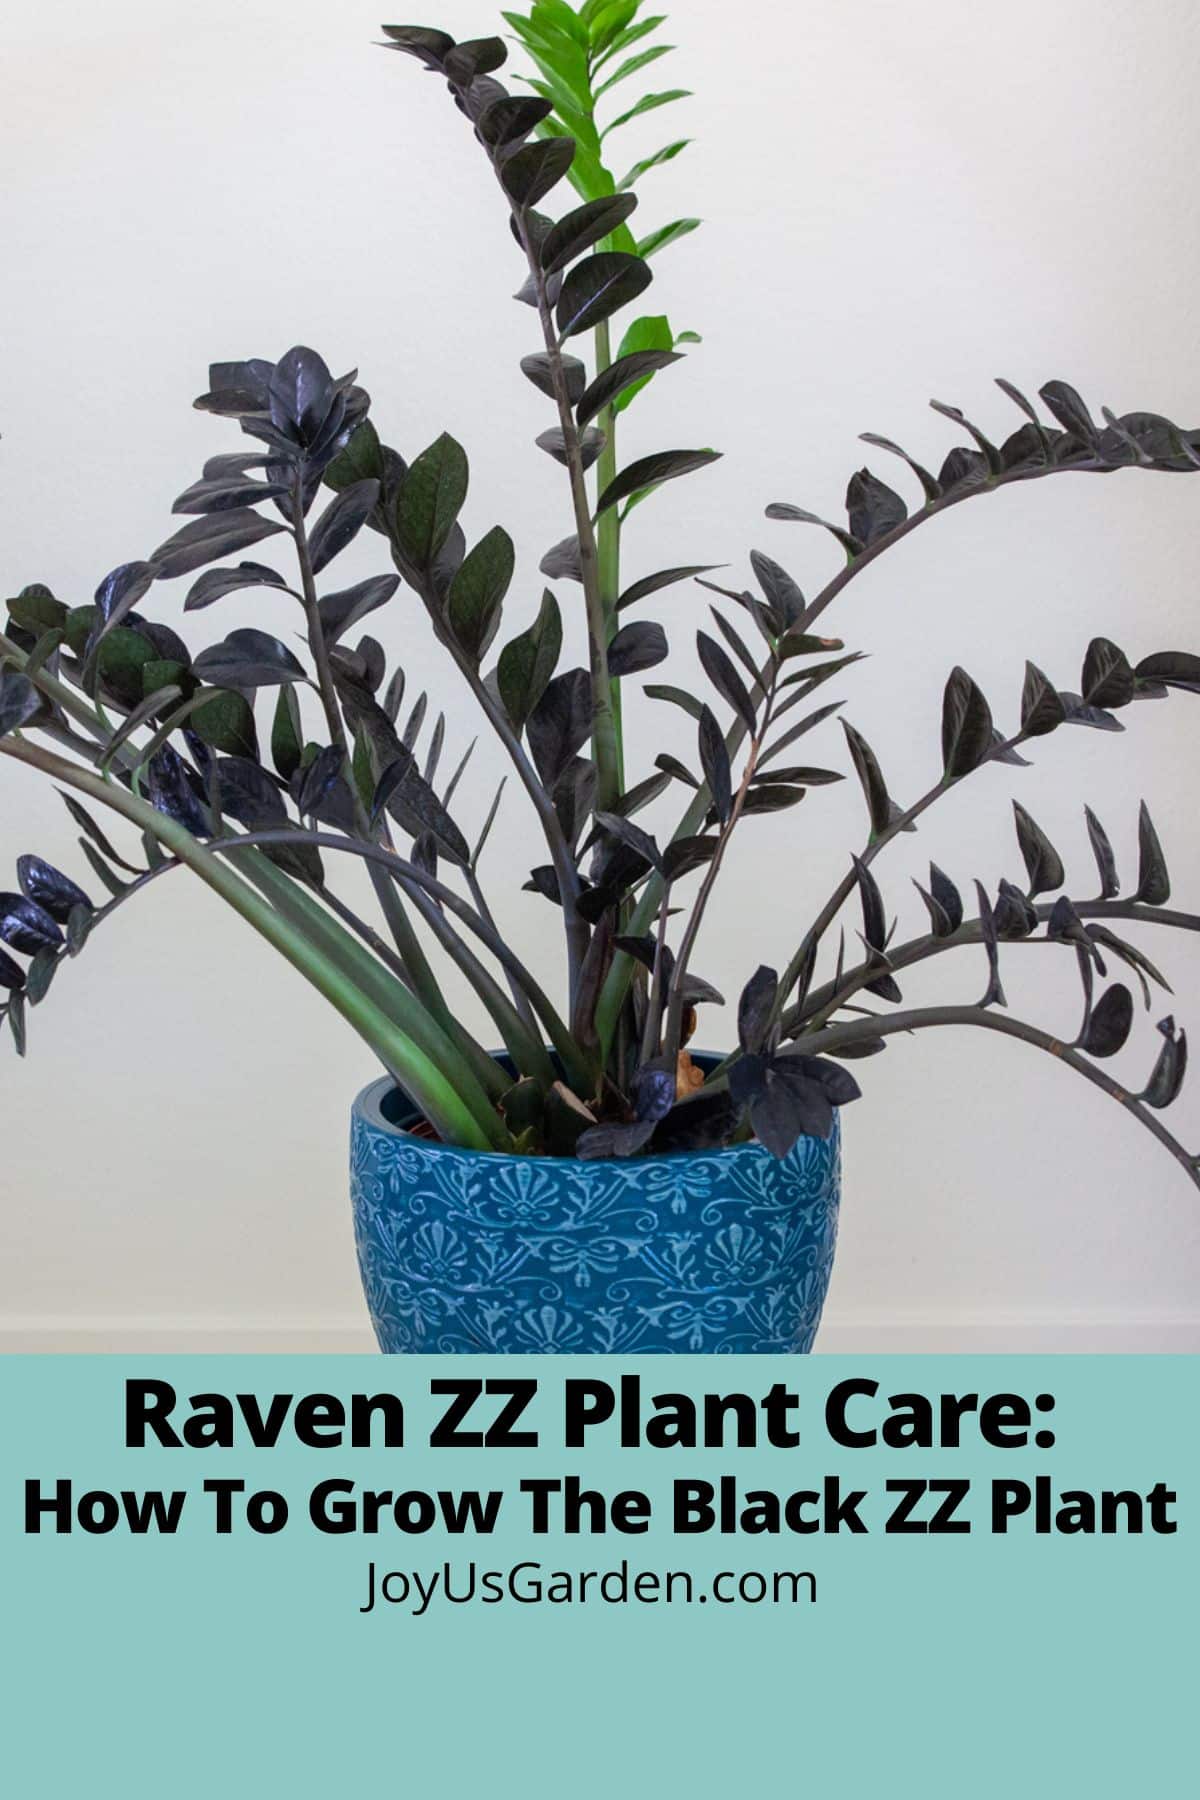  Raven ZZ taime hooldus: Kuidas kasvatada Black ZZ taime